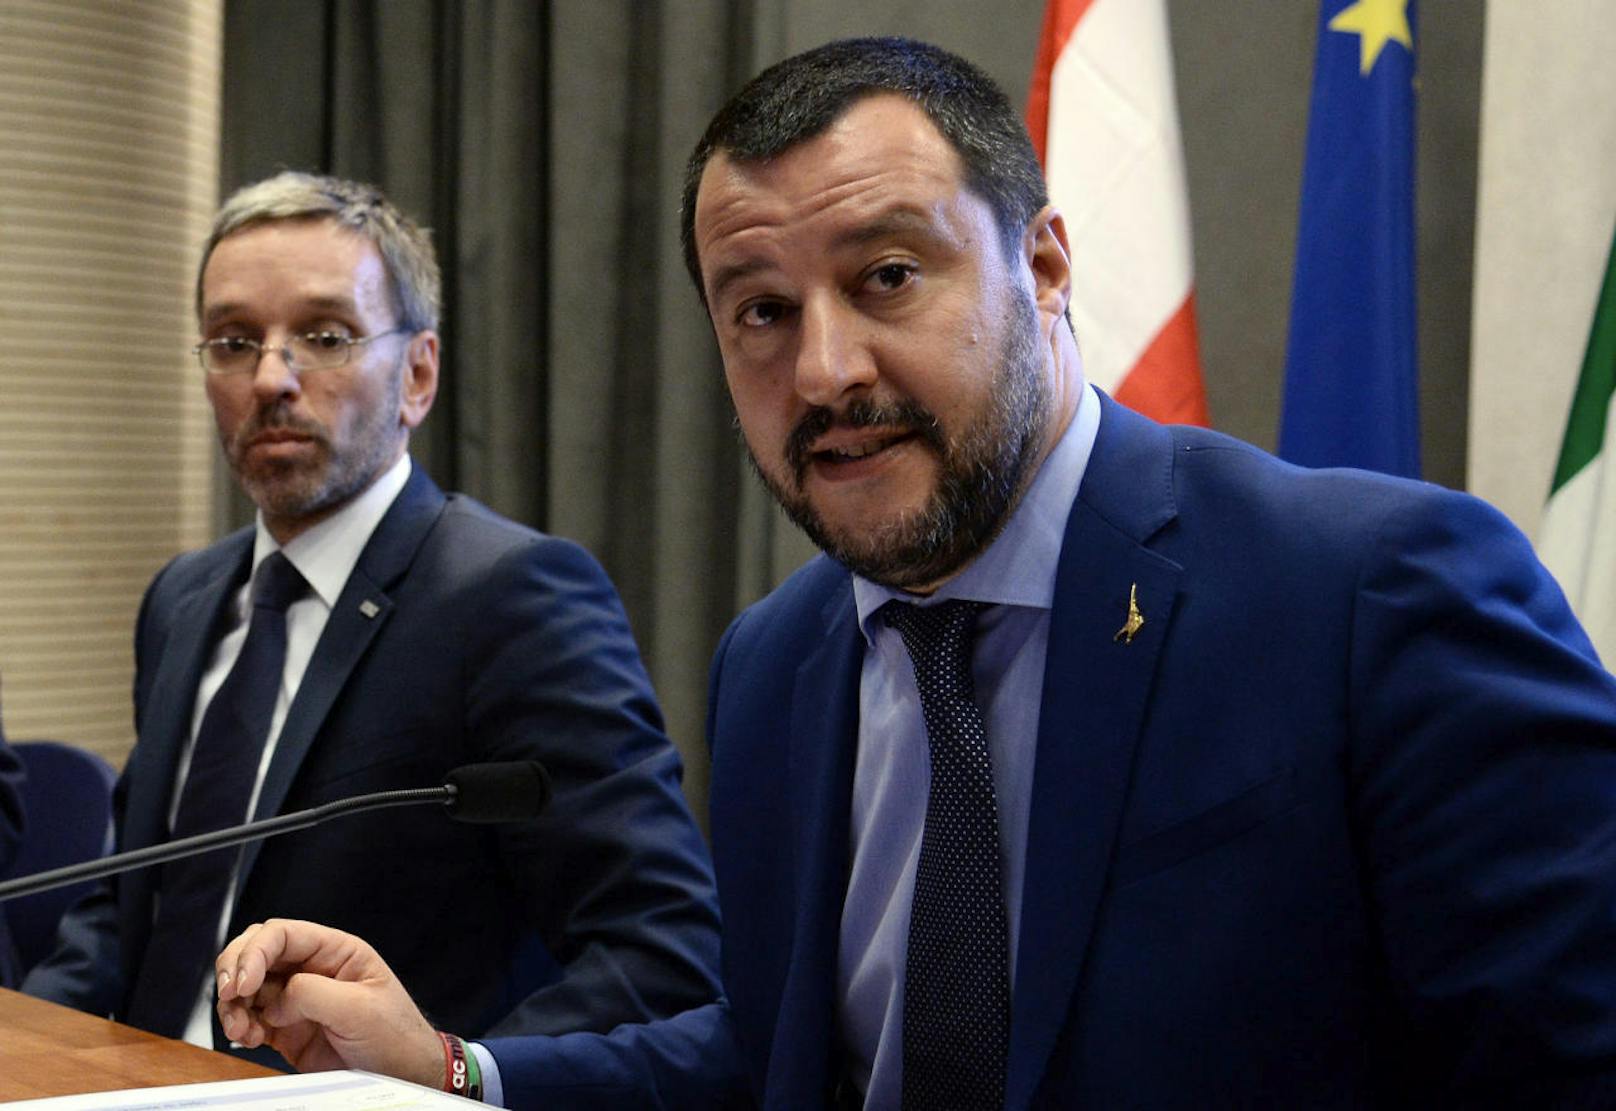 Matteo Salvini und Innenminister Herbert Kickl